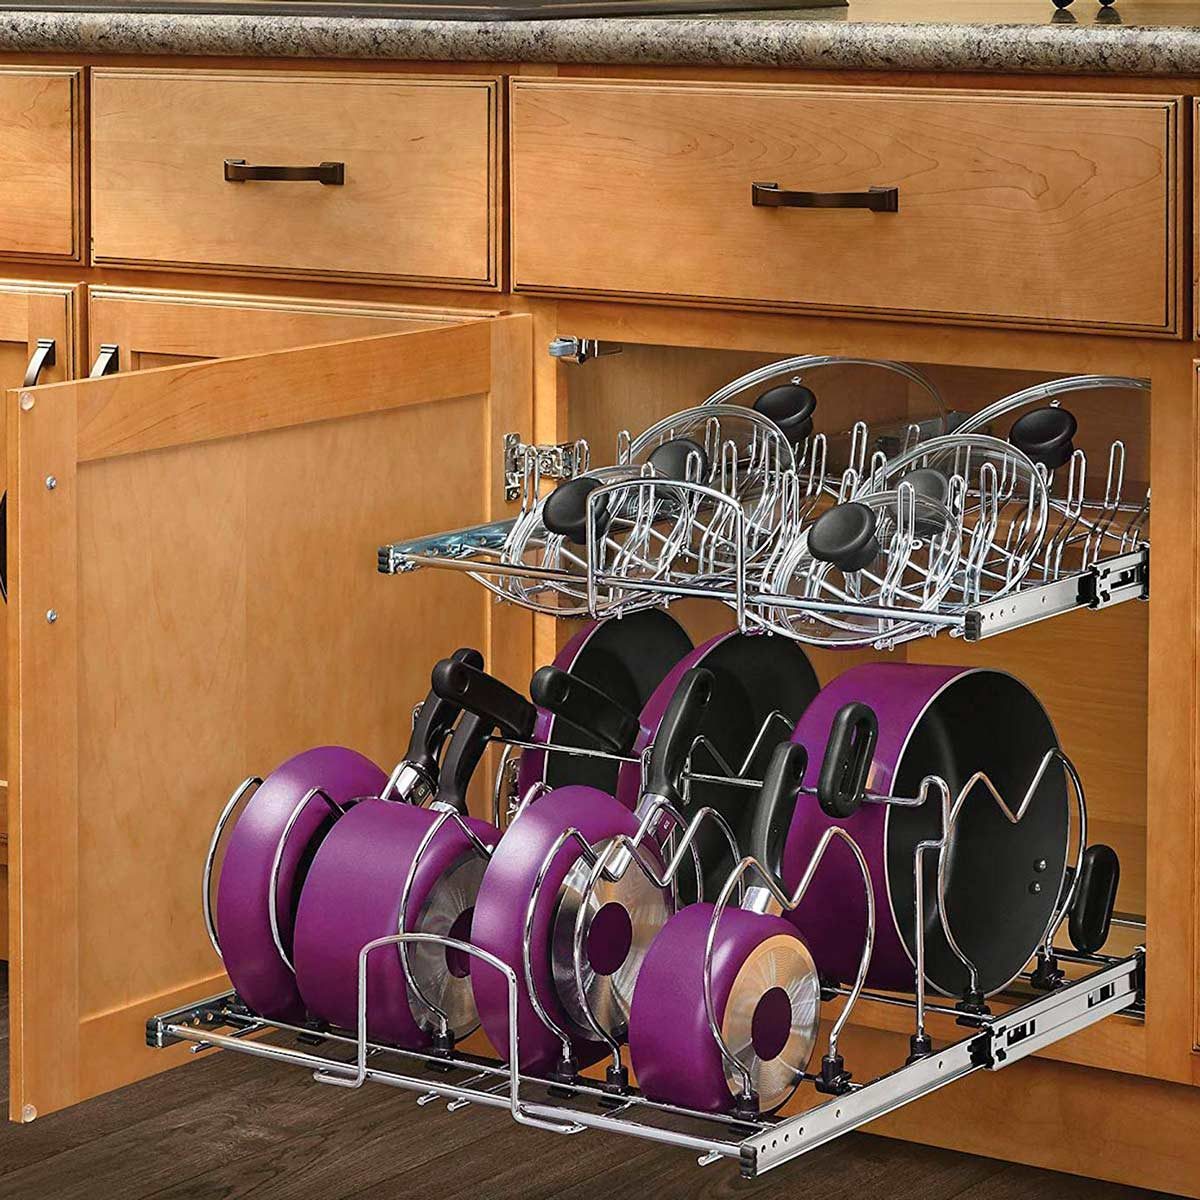 KODENG Kitchen Cabinet Storage Shelves Plates Dishes Chopping Board Storage  Rack Bowl Cup Holder Multifunction Kitchen Closet Organizer (L)